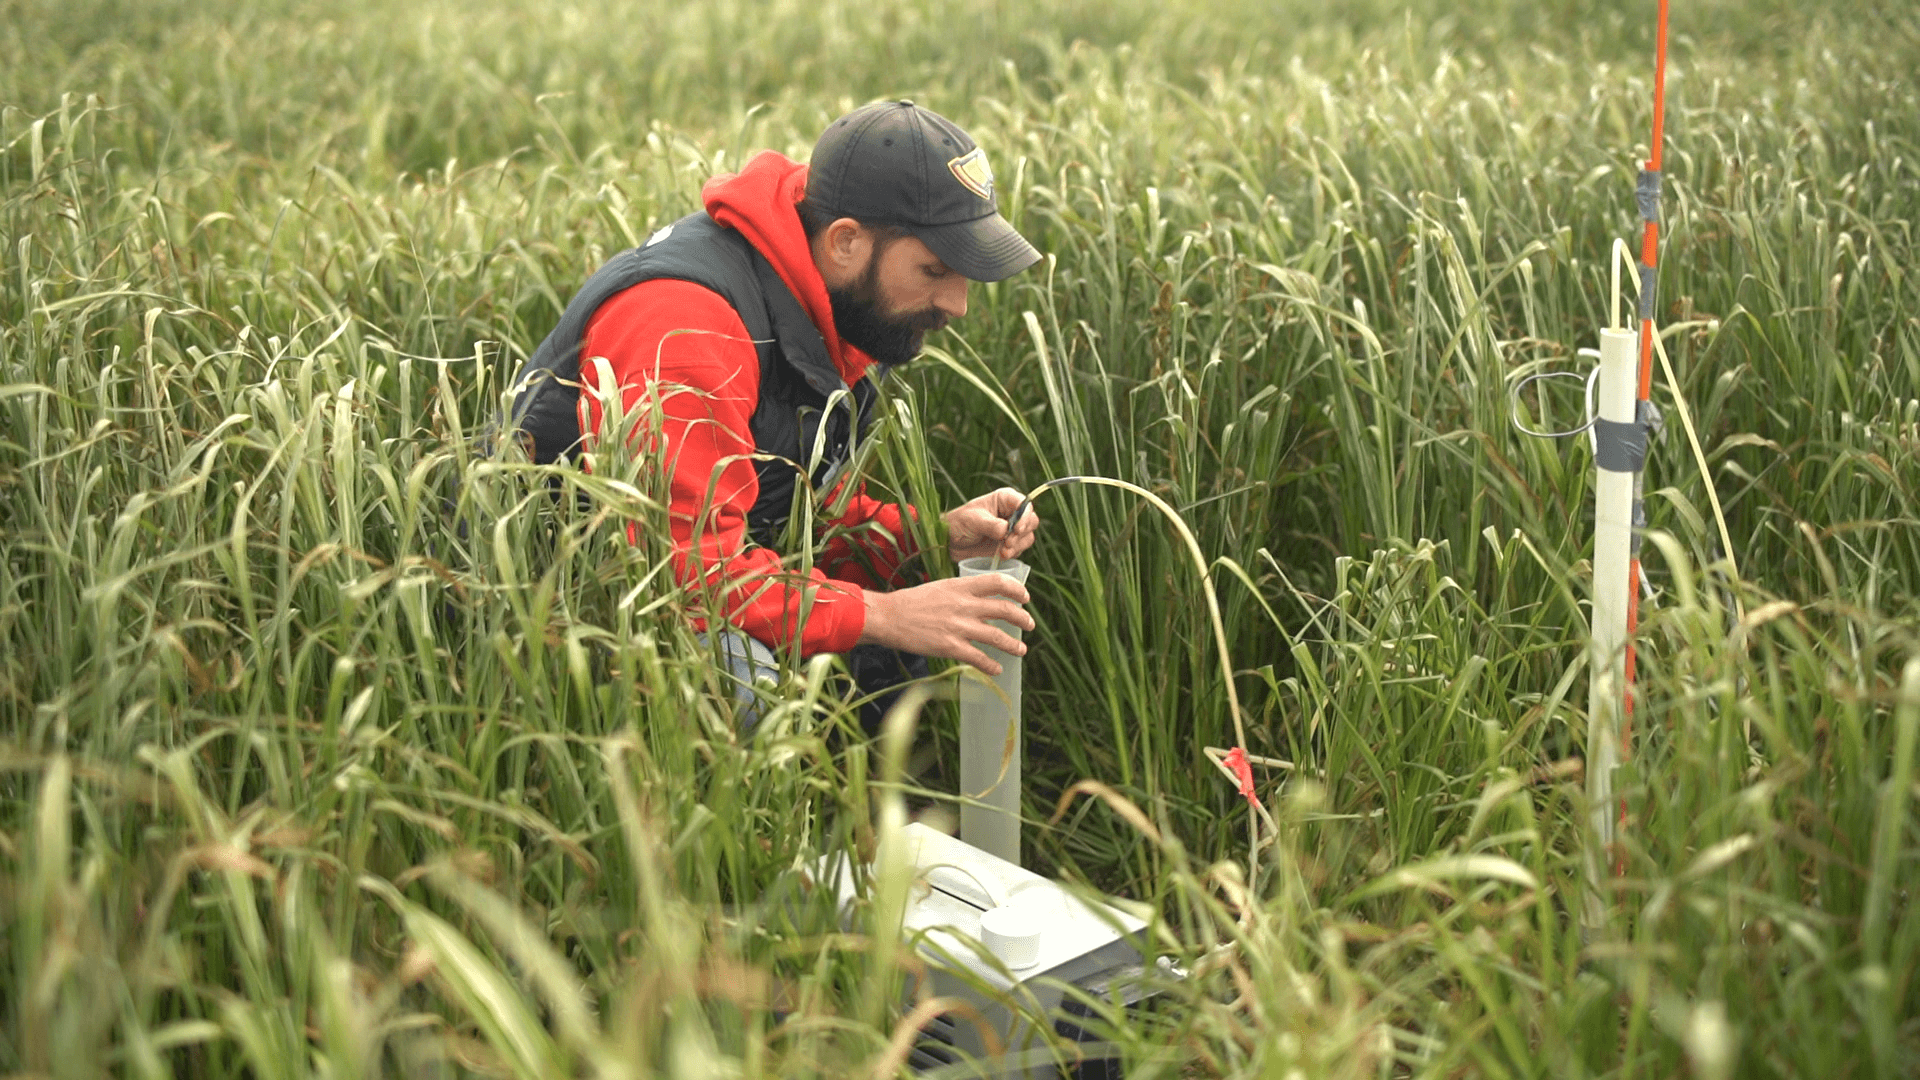 Man kneeling to take water sample in grassy field